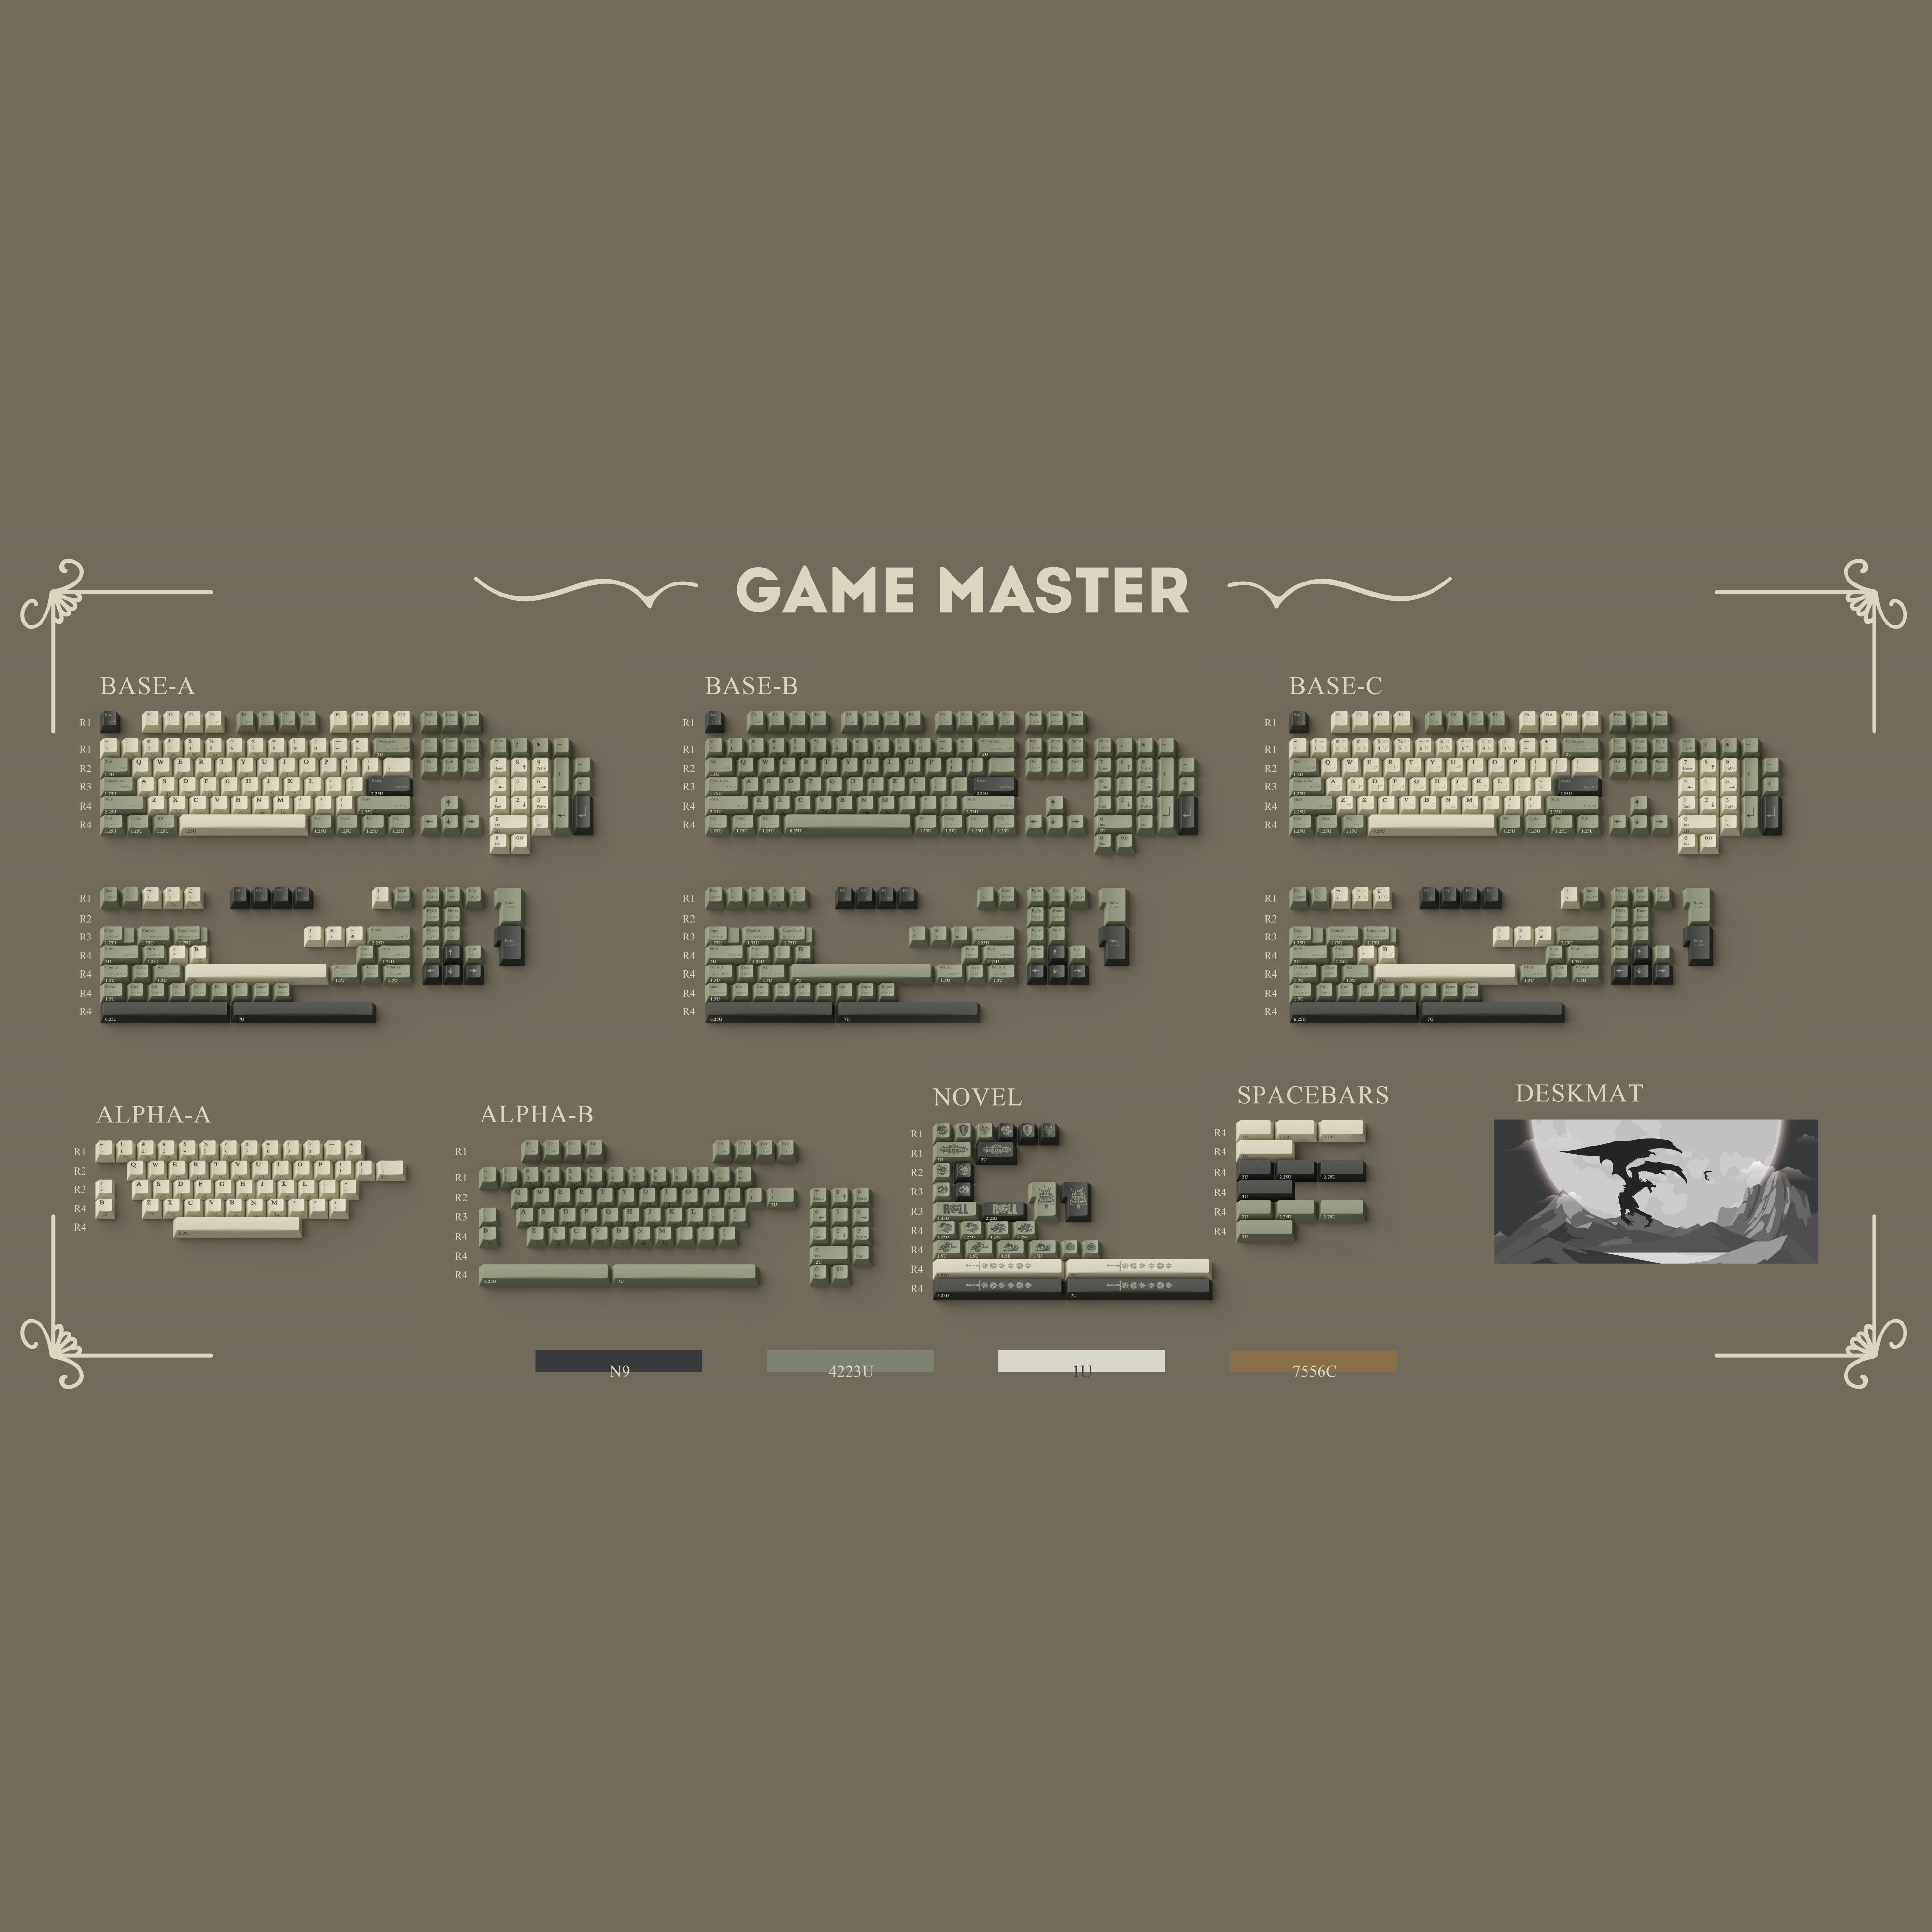 Zero-G Studio X Domikey "Game Master" Keycaps